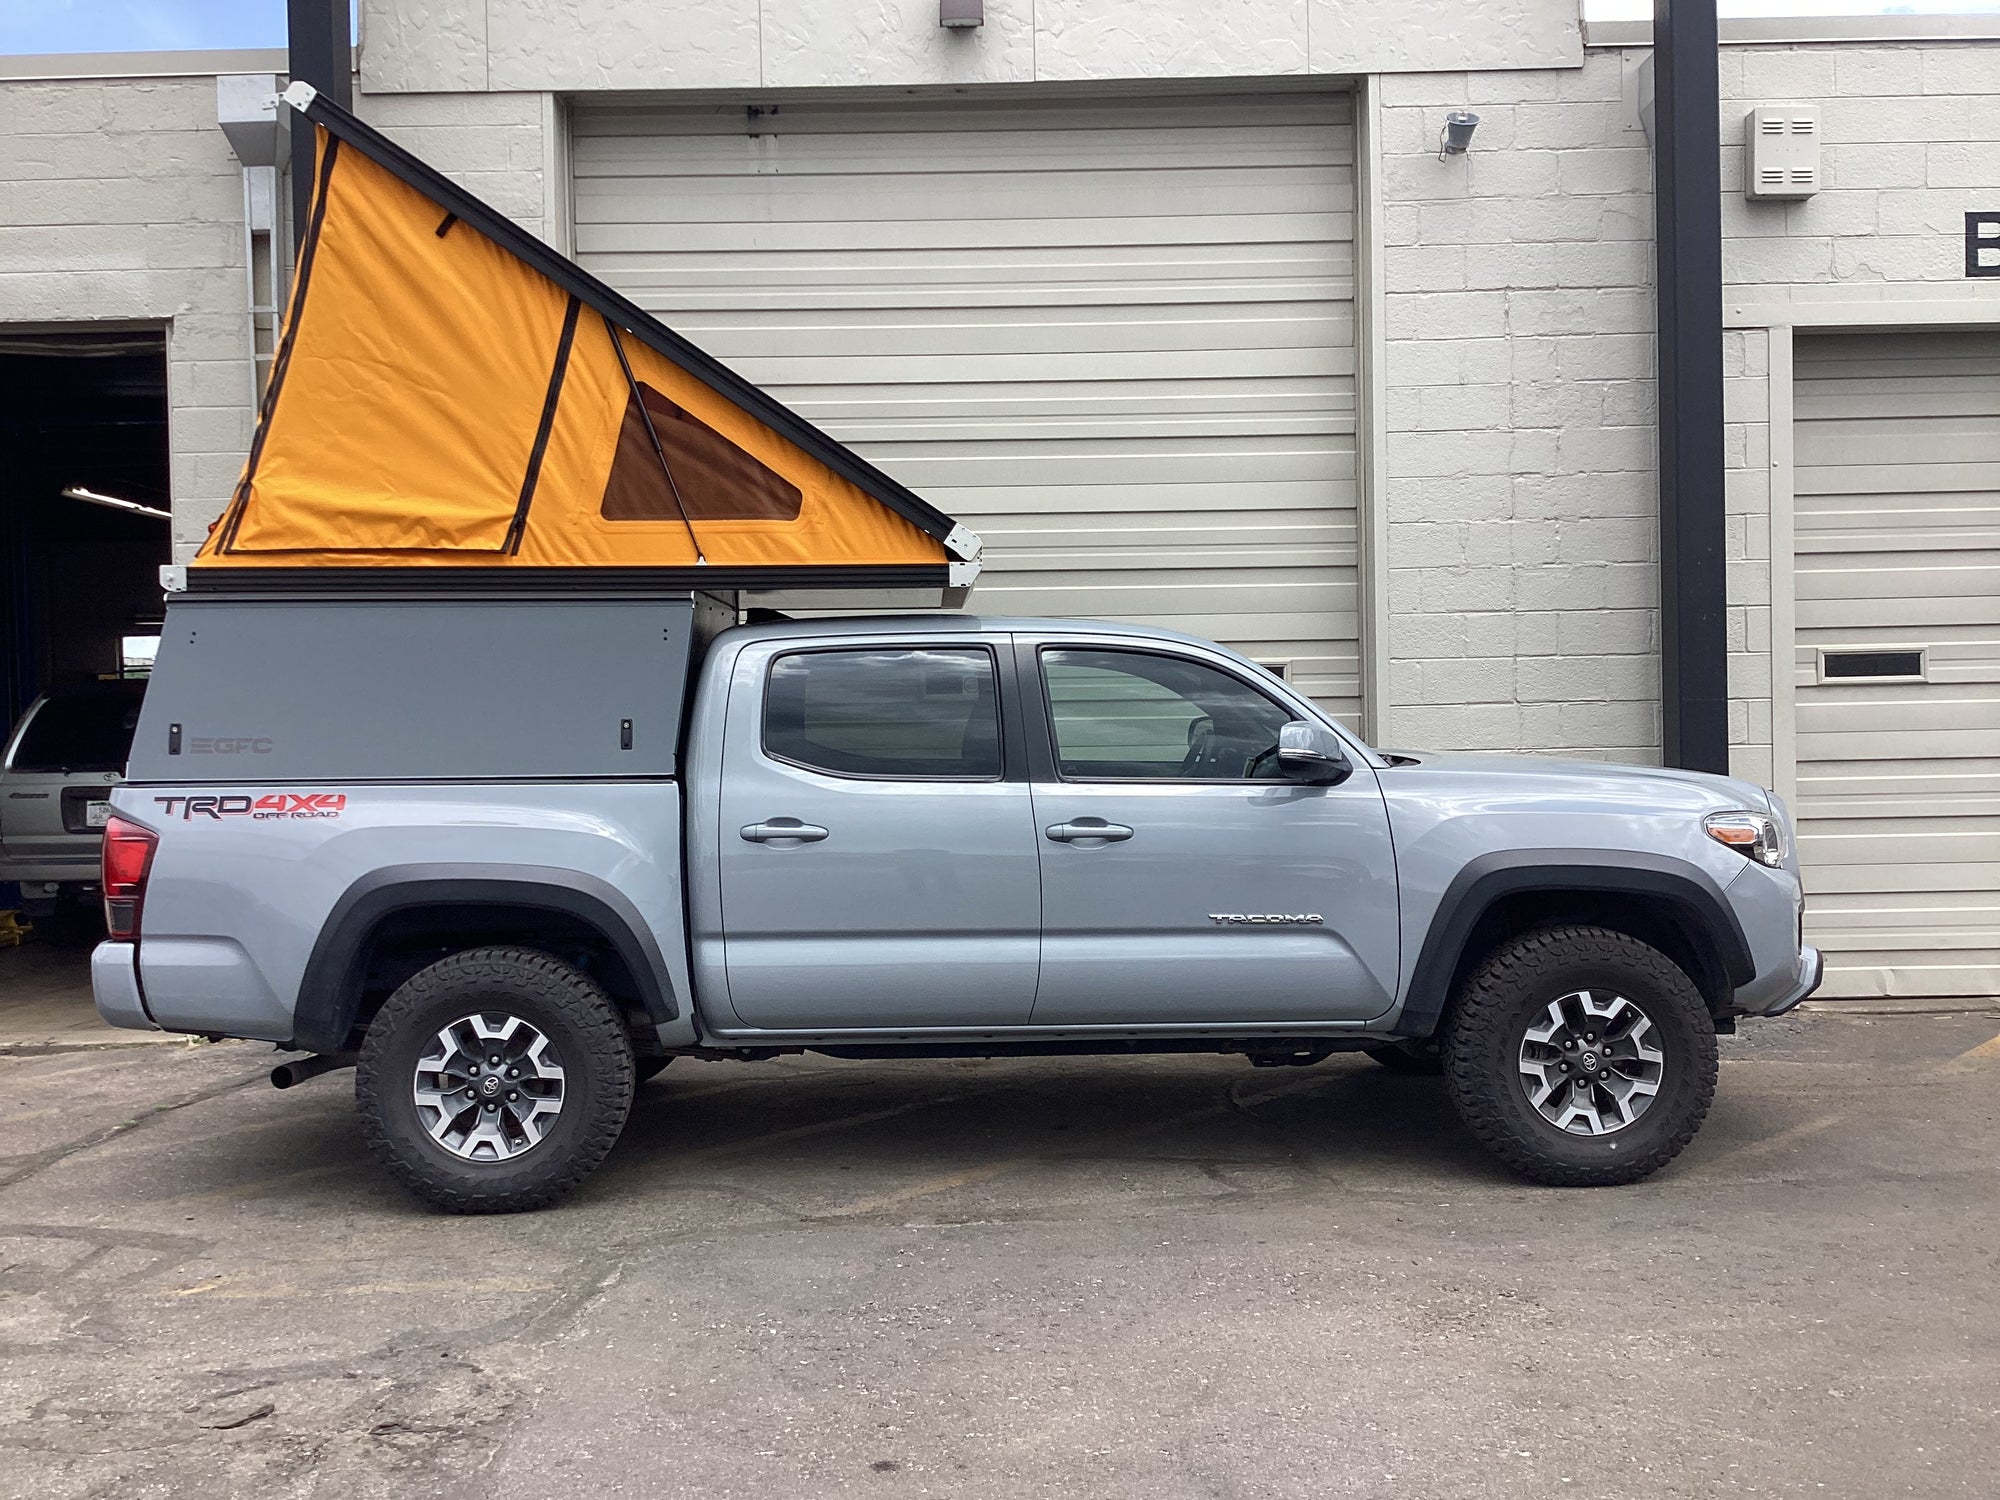 2019 Toyota Tacoma Camper Build 5226 Gofastcampers